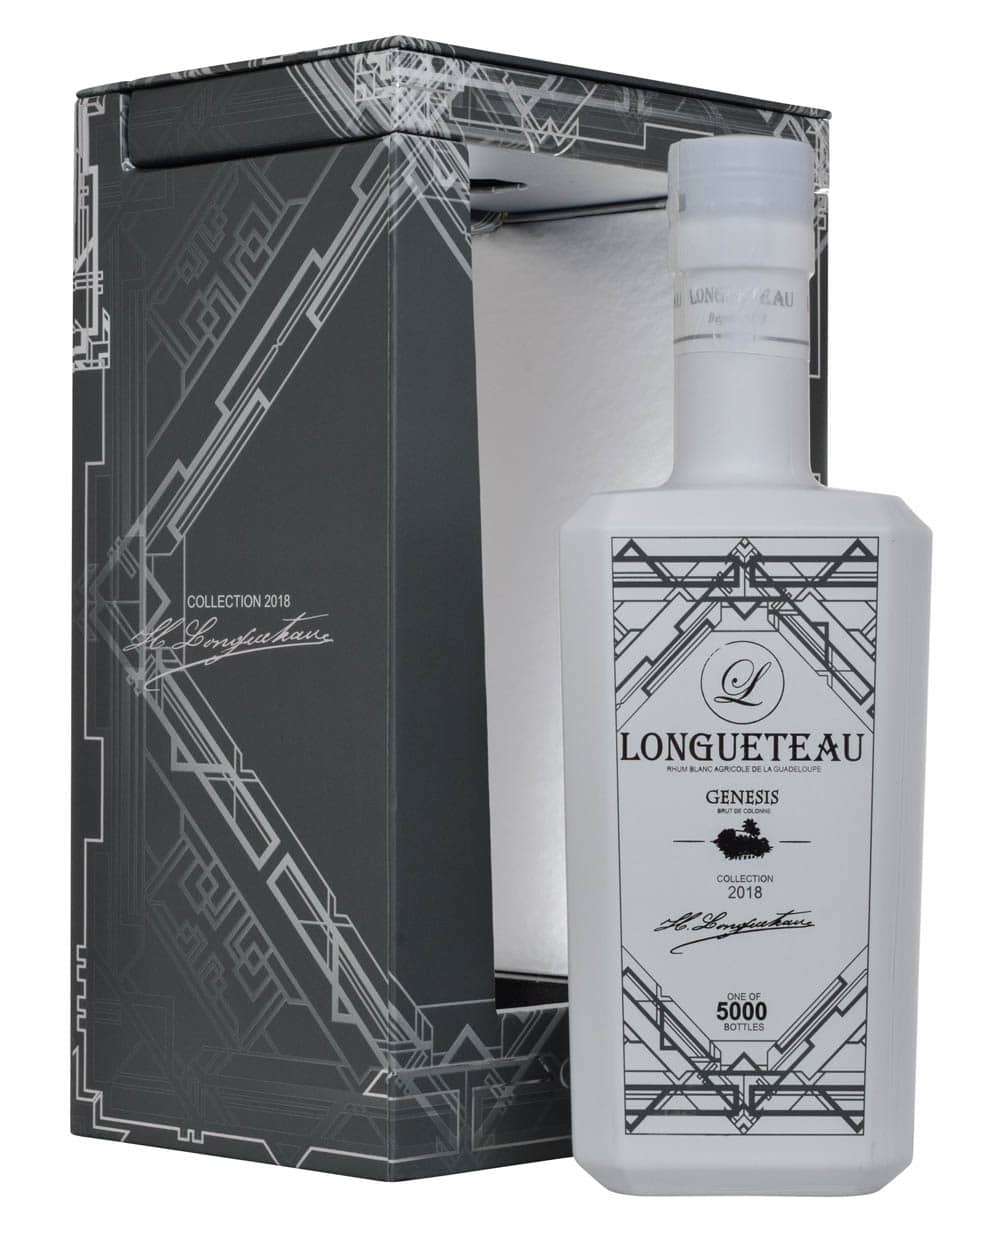 Longueteau Genesis Collection 2018 Box 2 Musthave Malts MHM